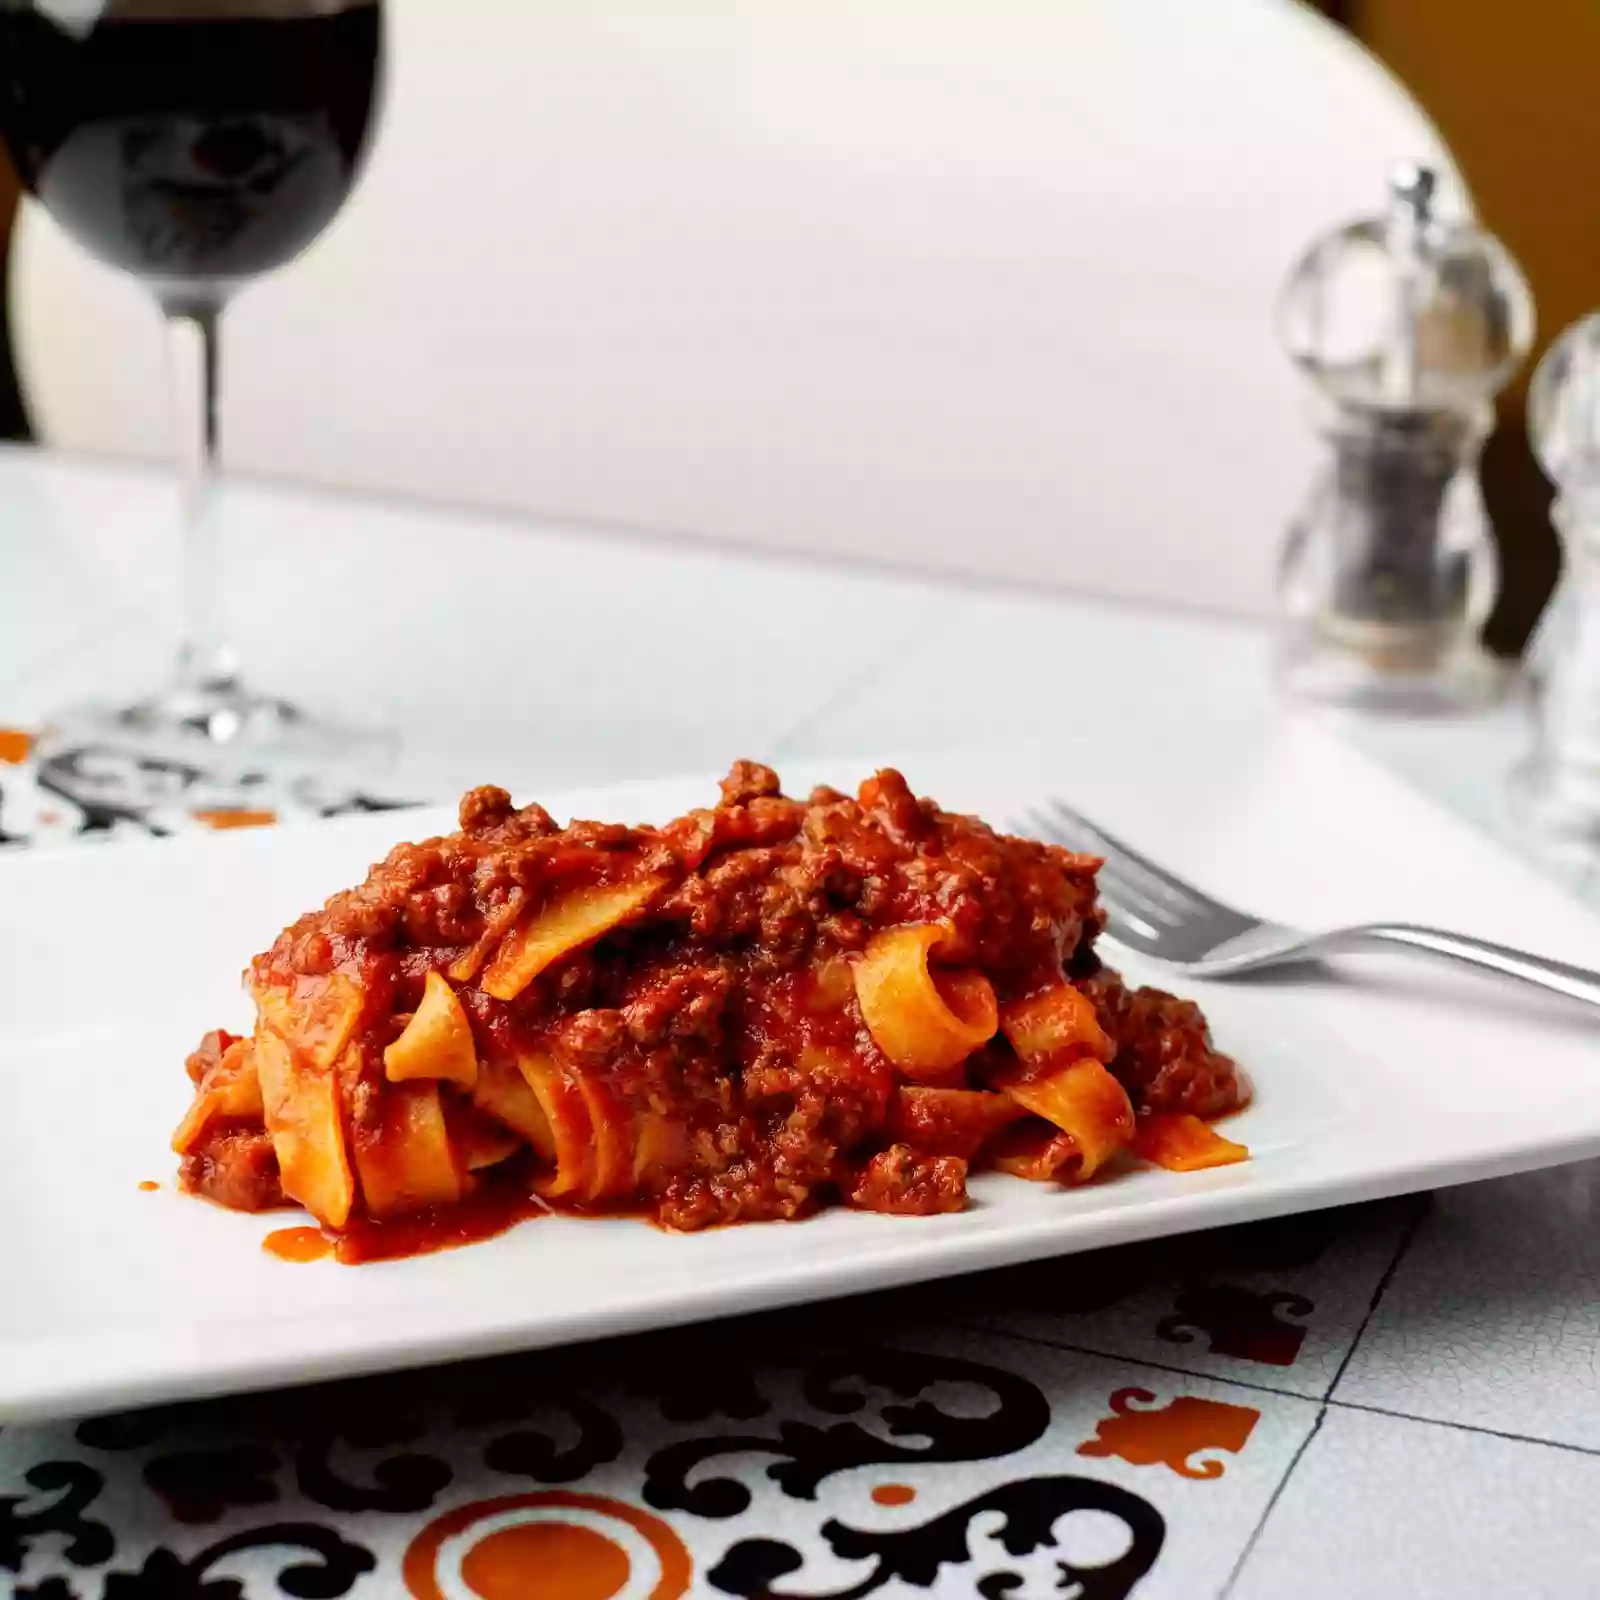 Tasting Italy - Italian Restaurant Piccadilly